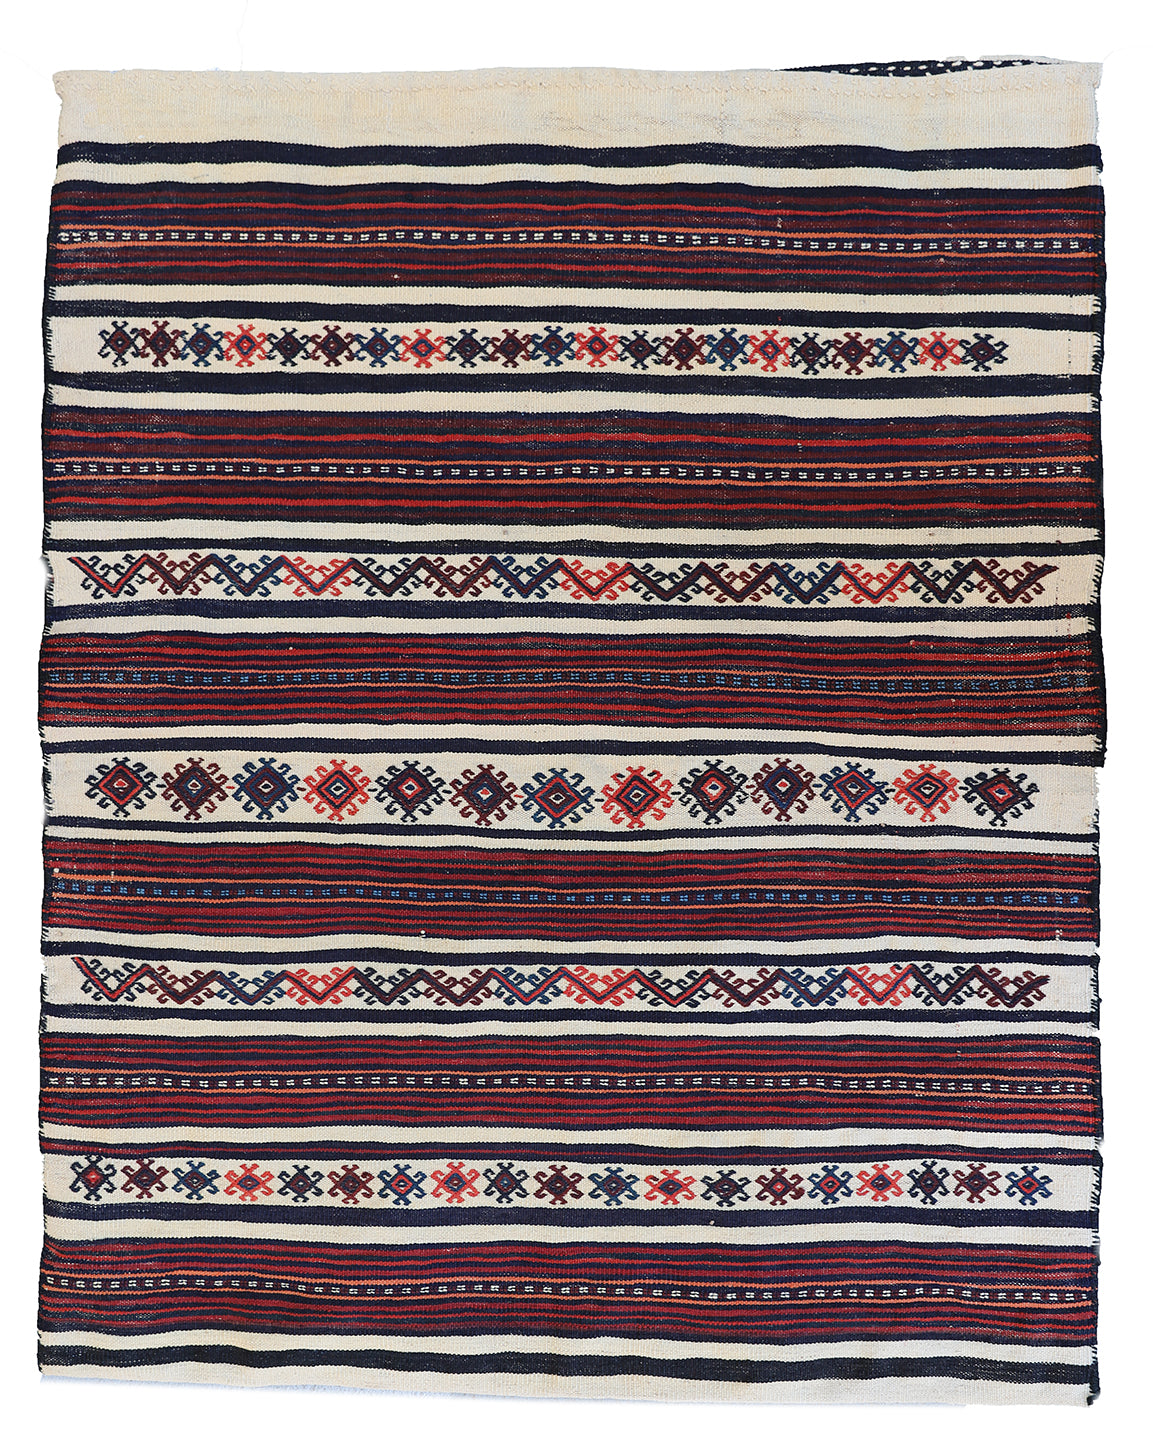 3'x5' Soumak Weave Vintage Tribal Persian Bag-face With Original Back